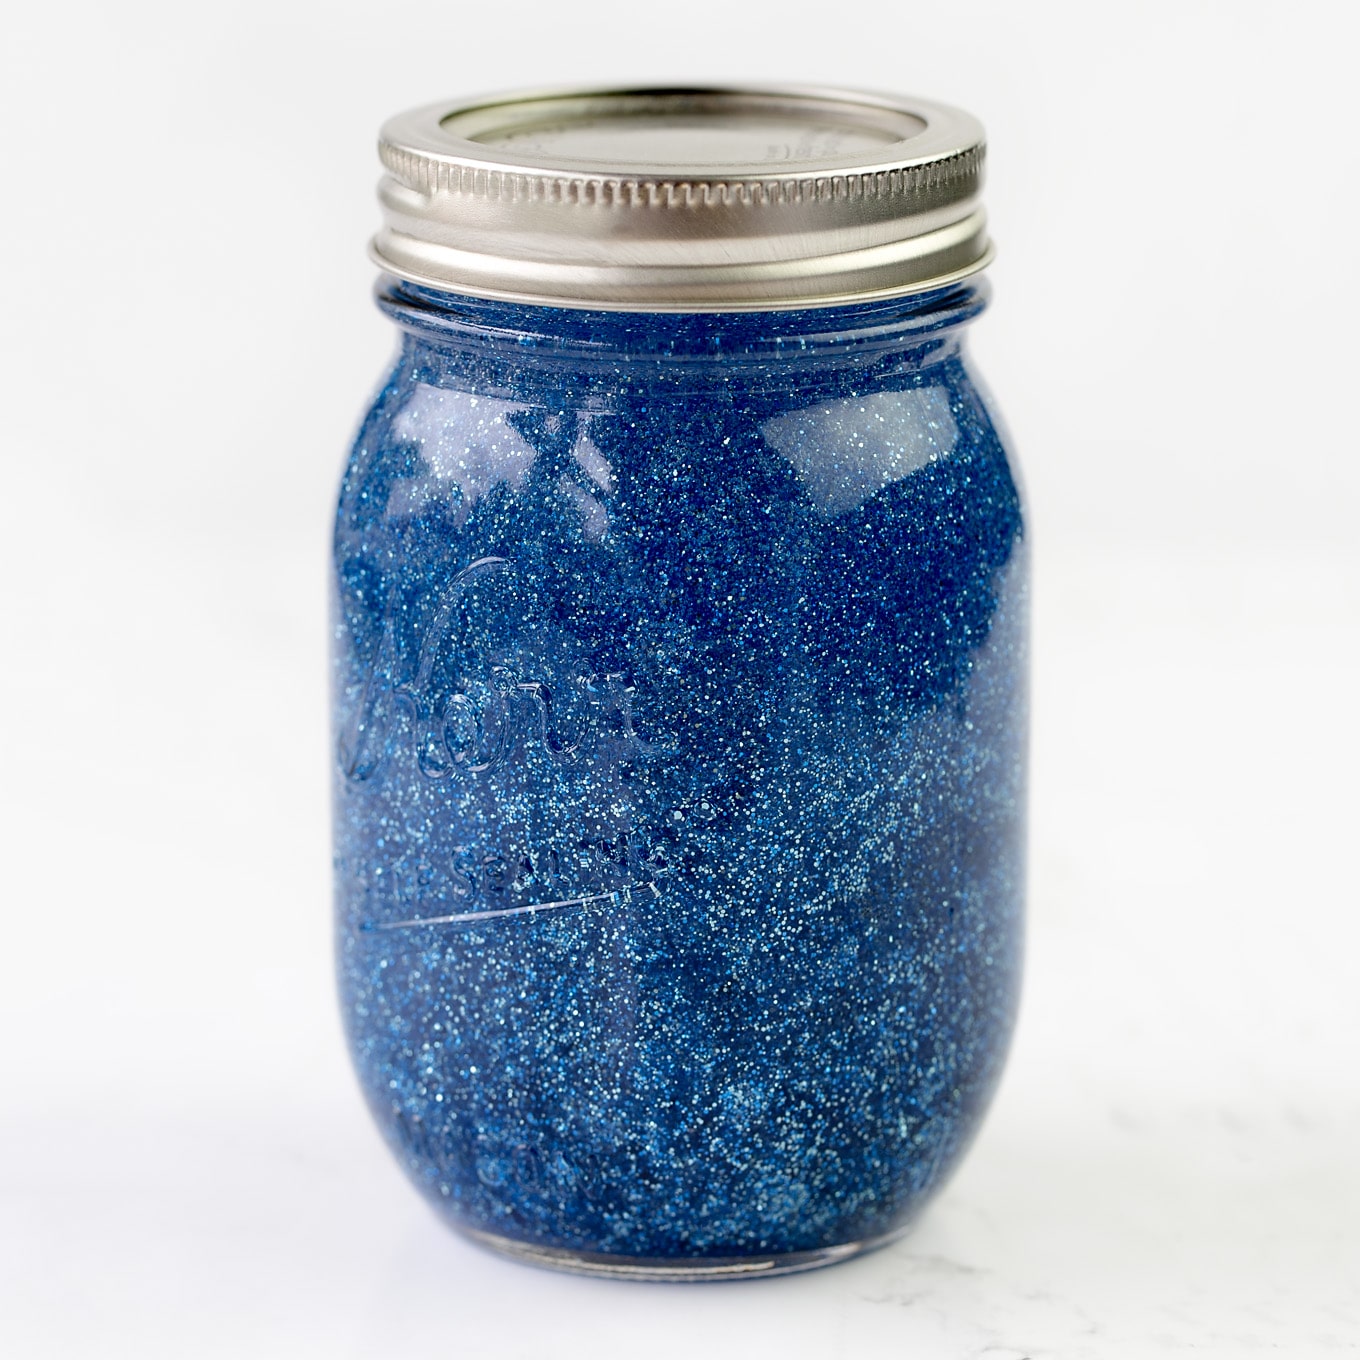 How a Glitter Jar Can Help Kids Control Their Feelings